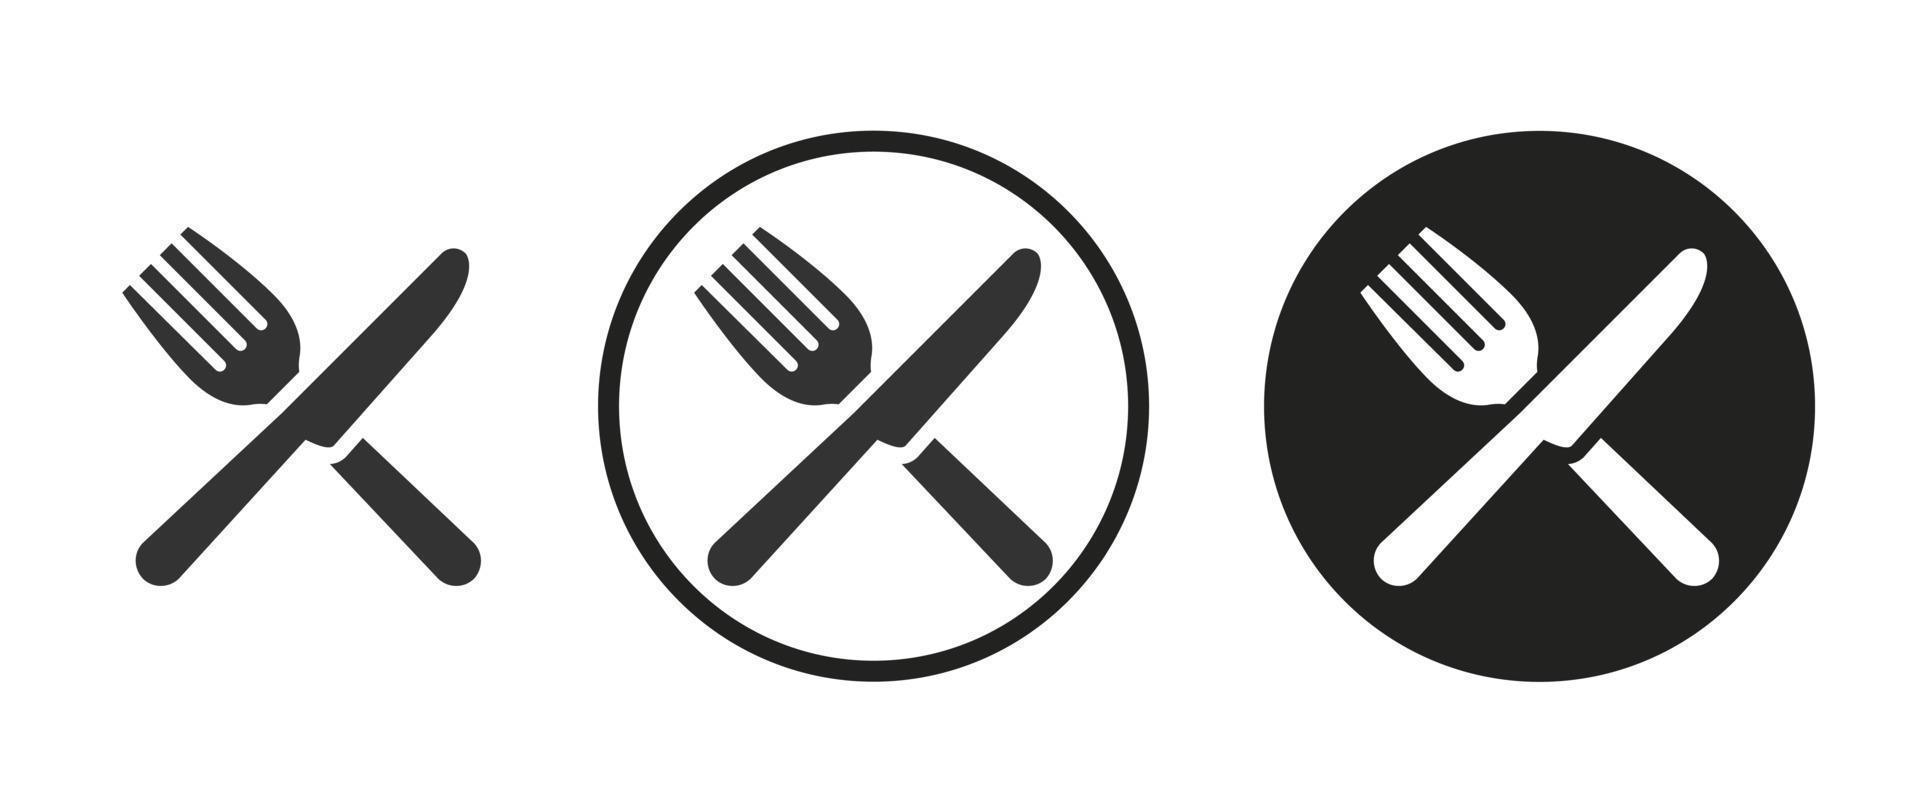 Messer und Probensymbol. Web-Icon-Set .Vektor-Illustration vektor